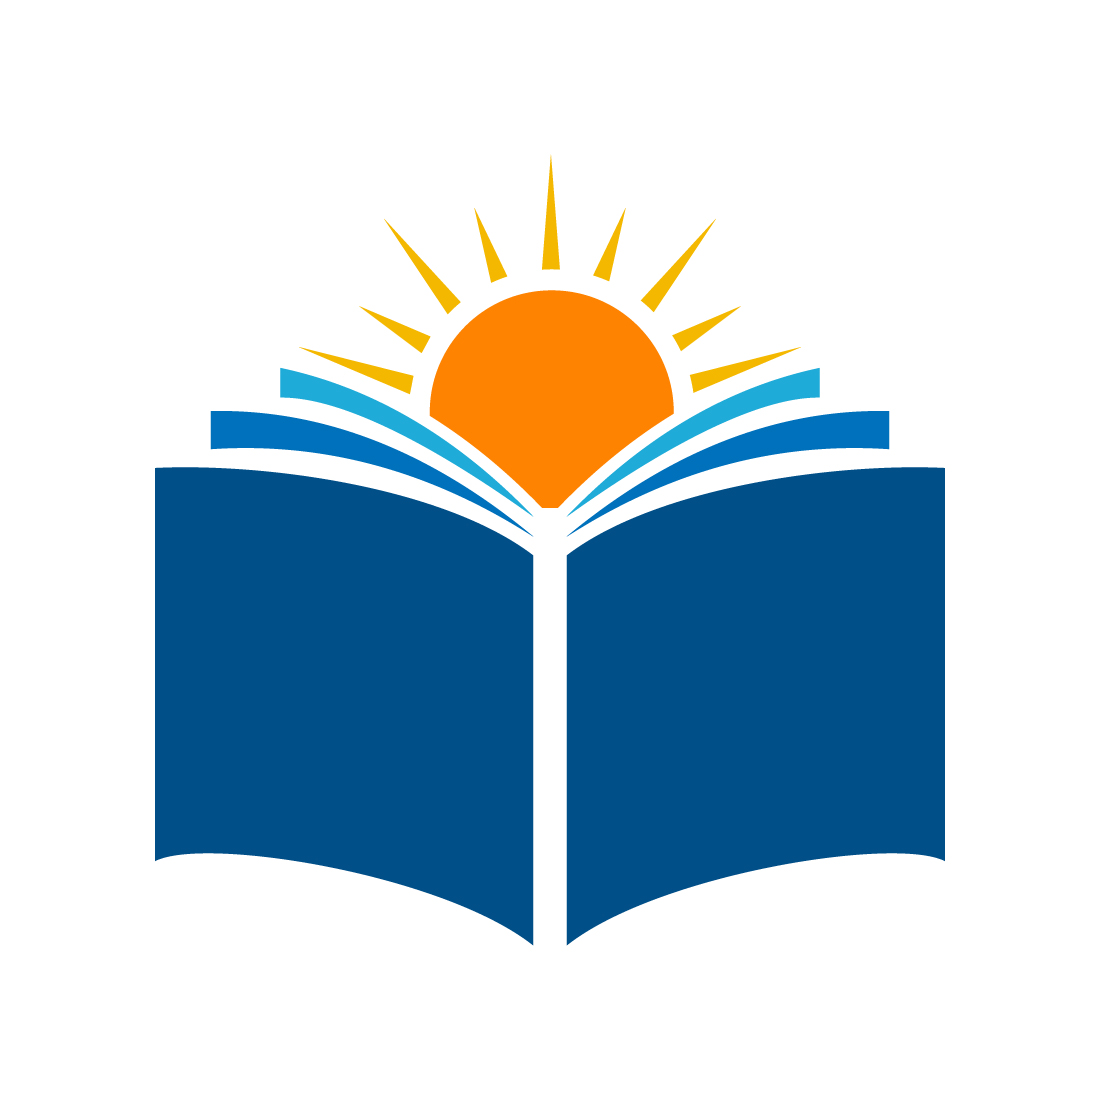 vector education logo